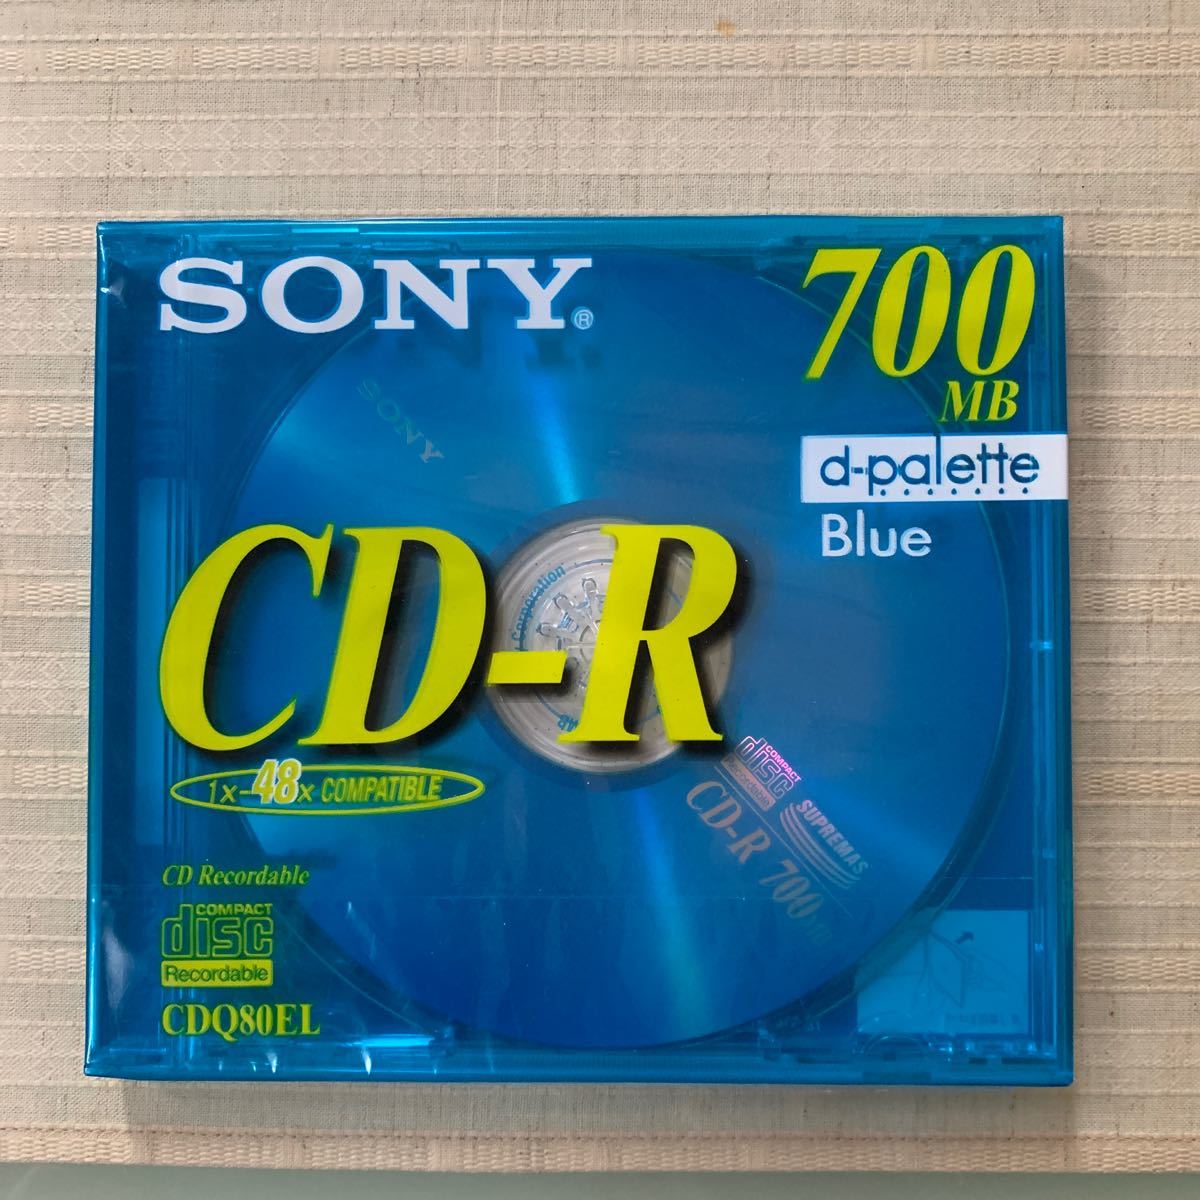 SONY  CD-R 700MB d-palette Blue CDQ80EL  4枚セット